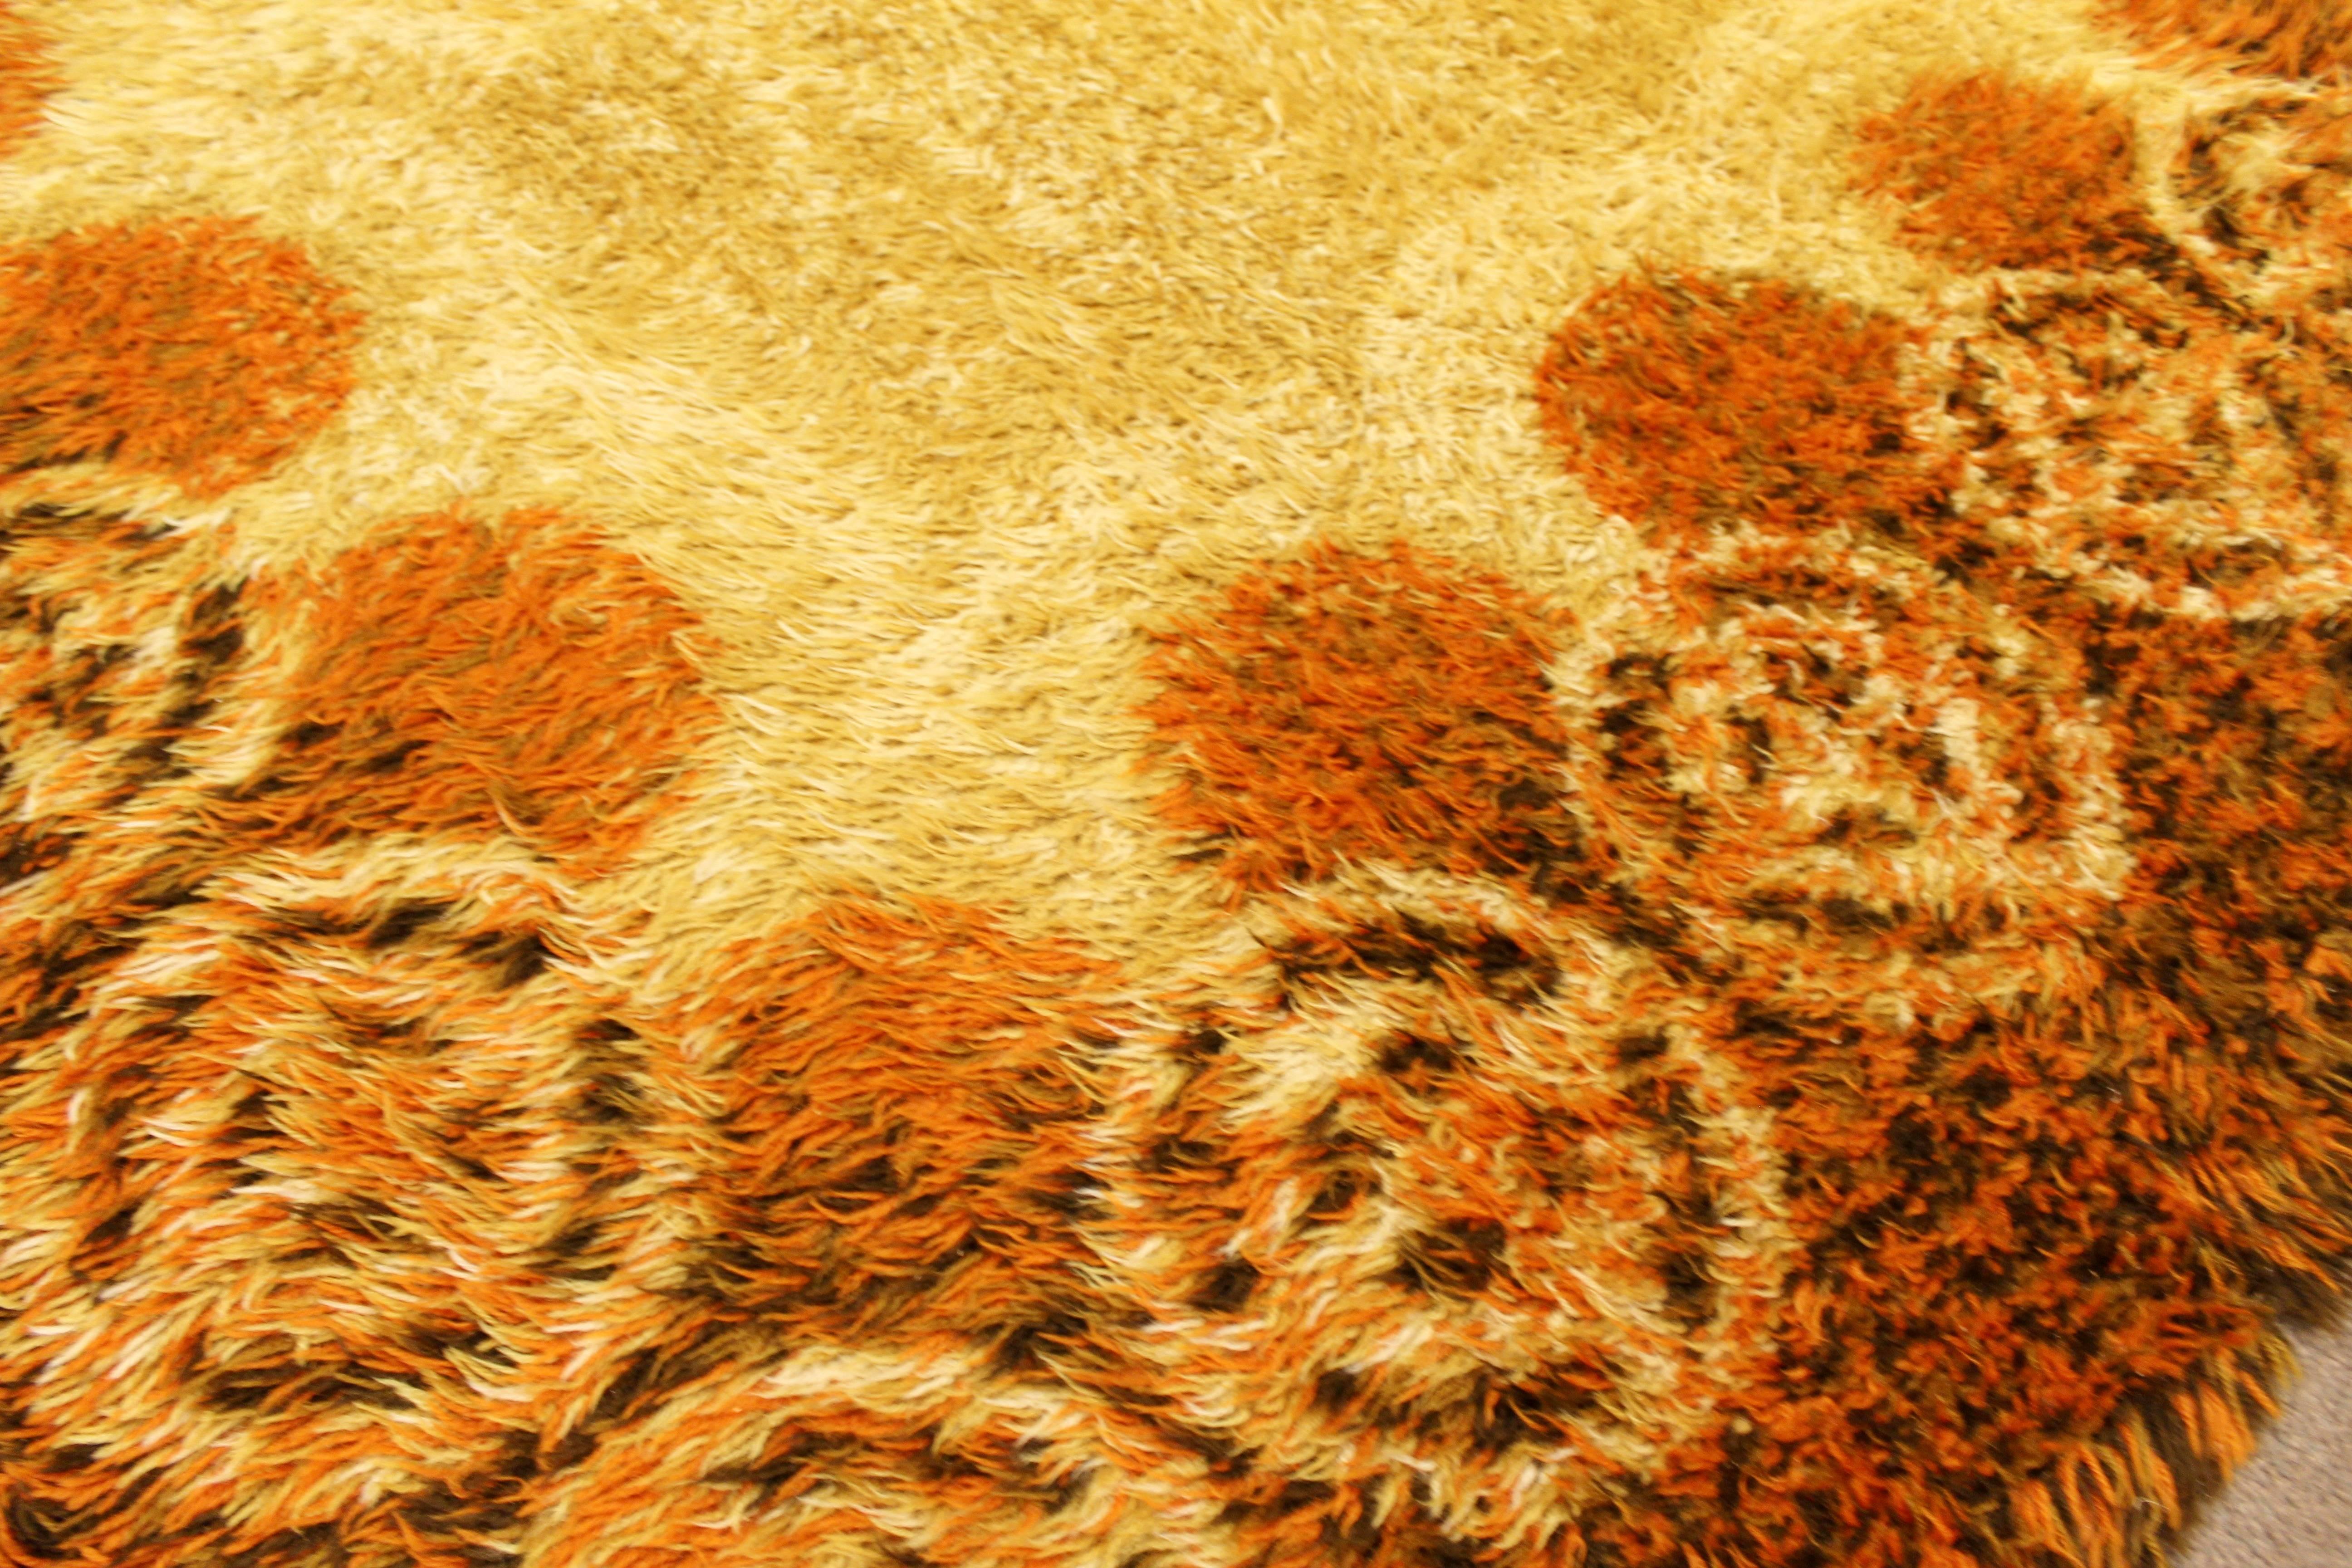 Mid-20th Century Mid-Century Modern Rectangular Rya Area Rug Carpet Orange 1960s Sunburst Pattern